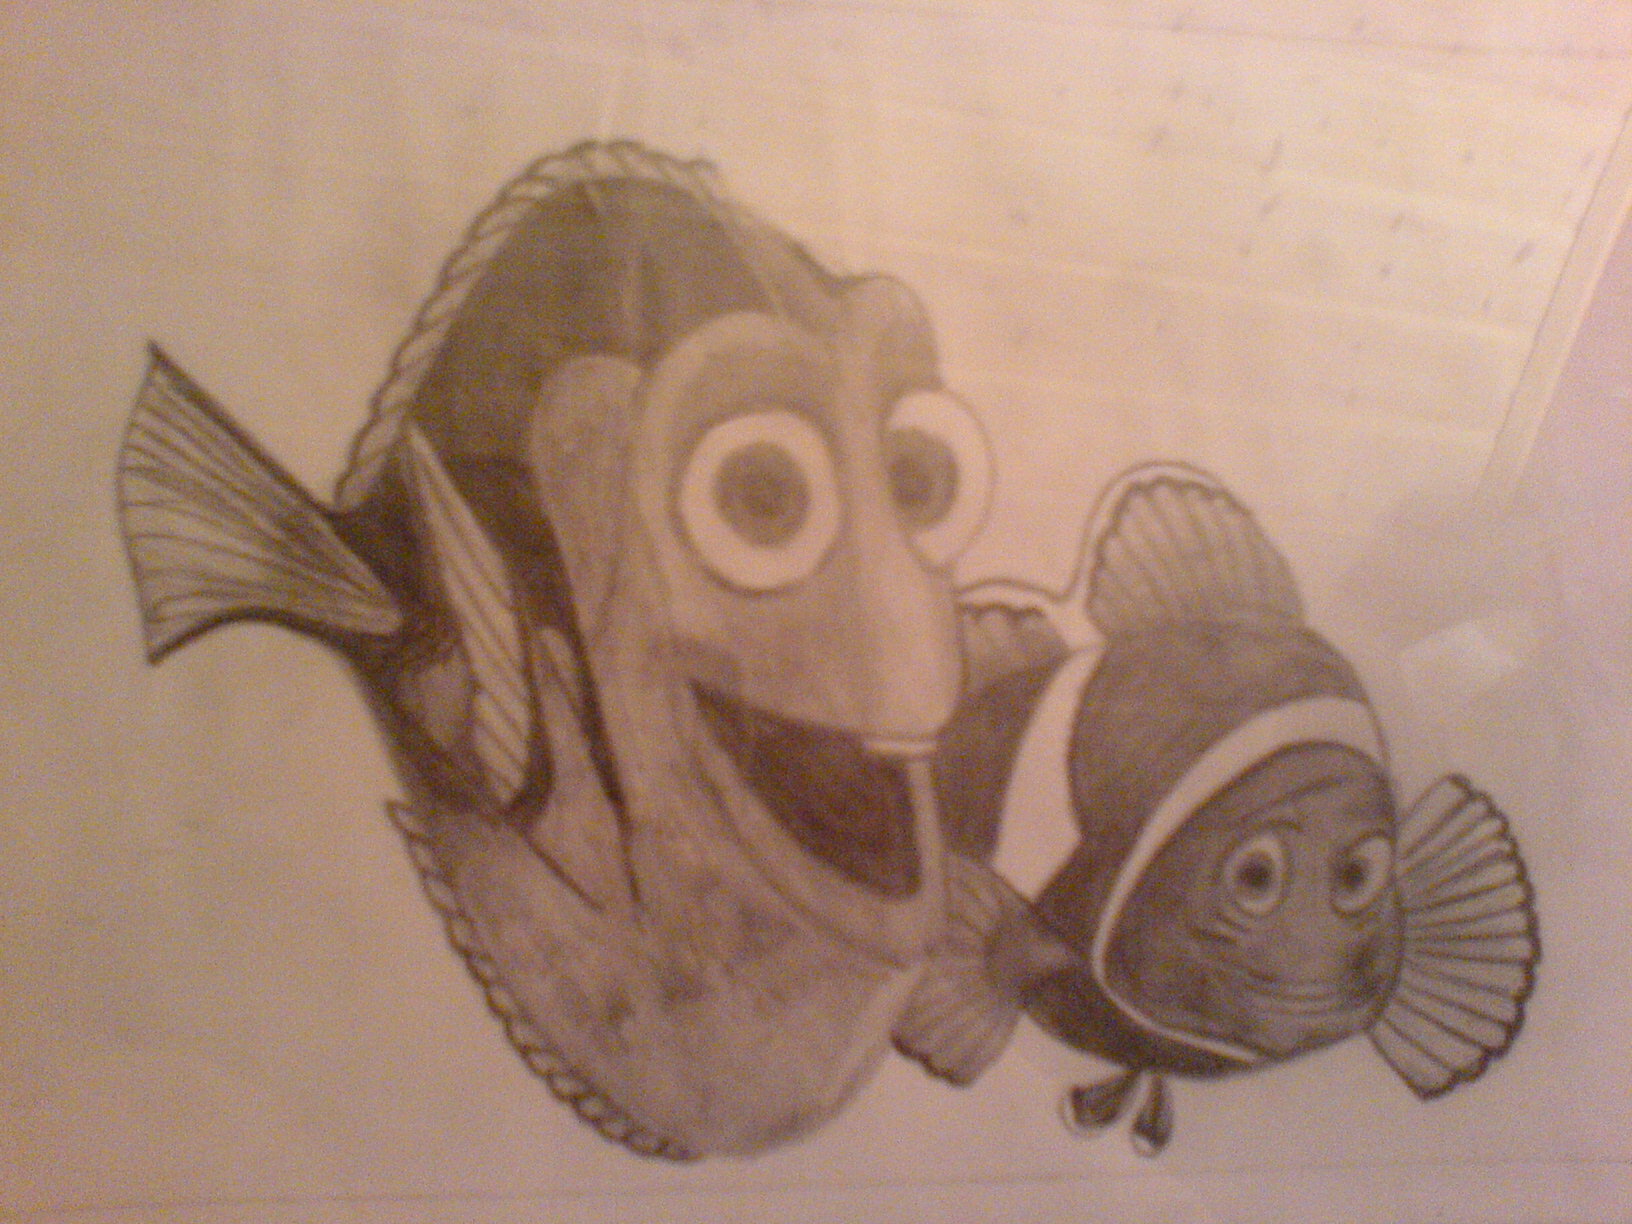 Finding Nemo by 9ta